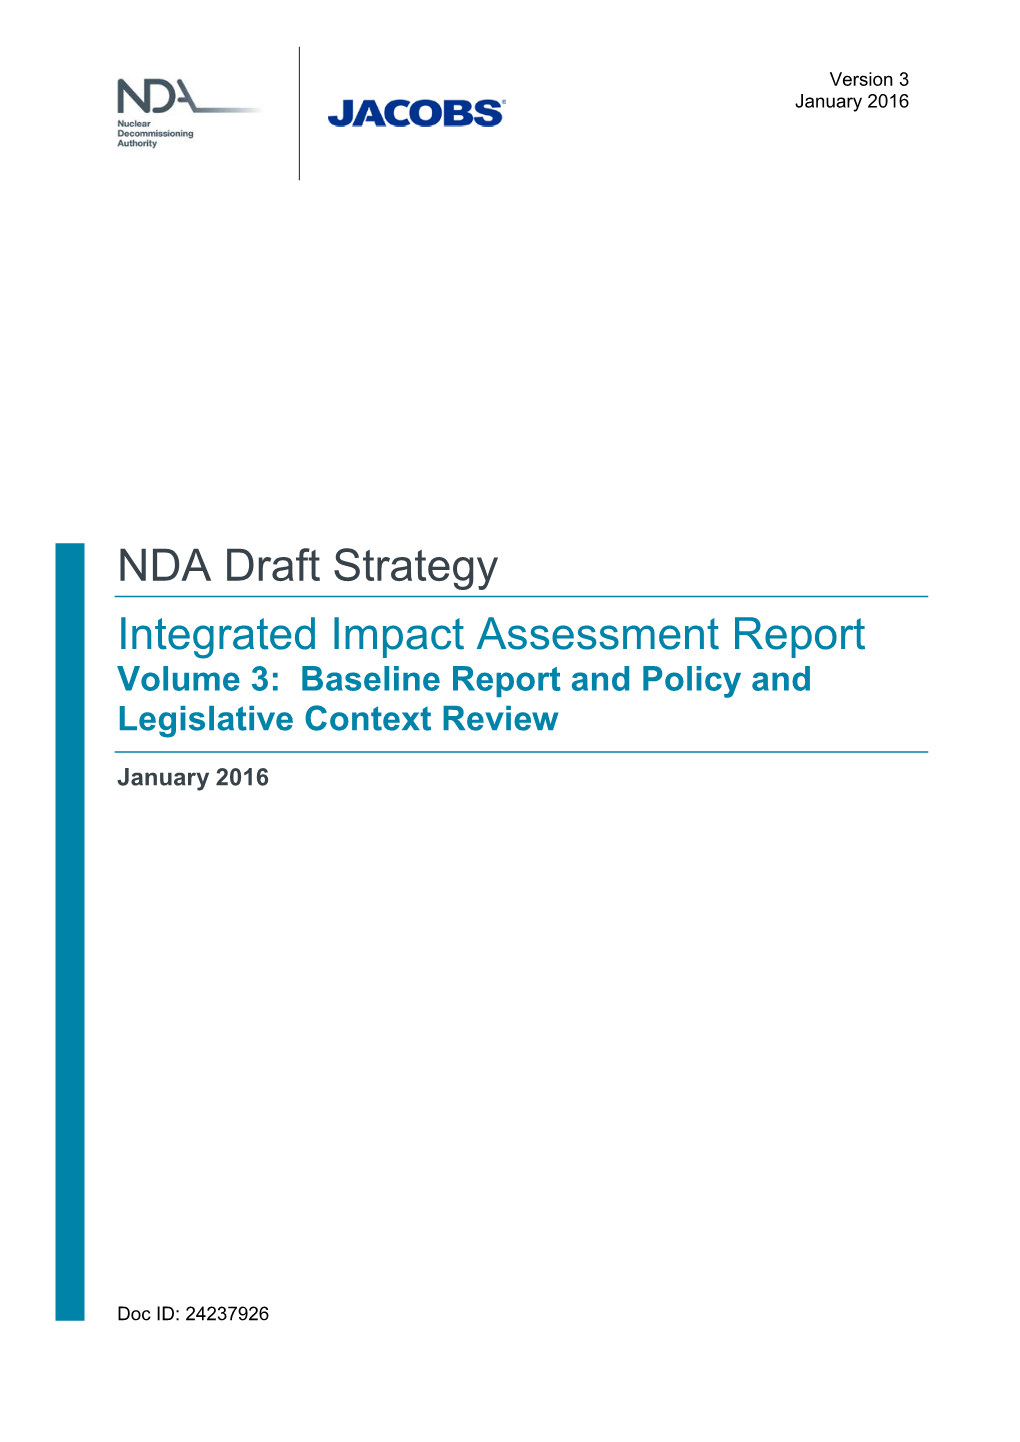 NDA Draft Strategy: Integrated Impact Assessment Report